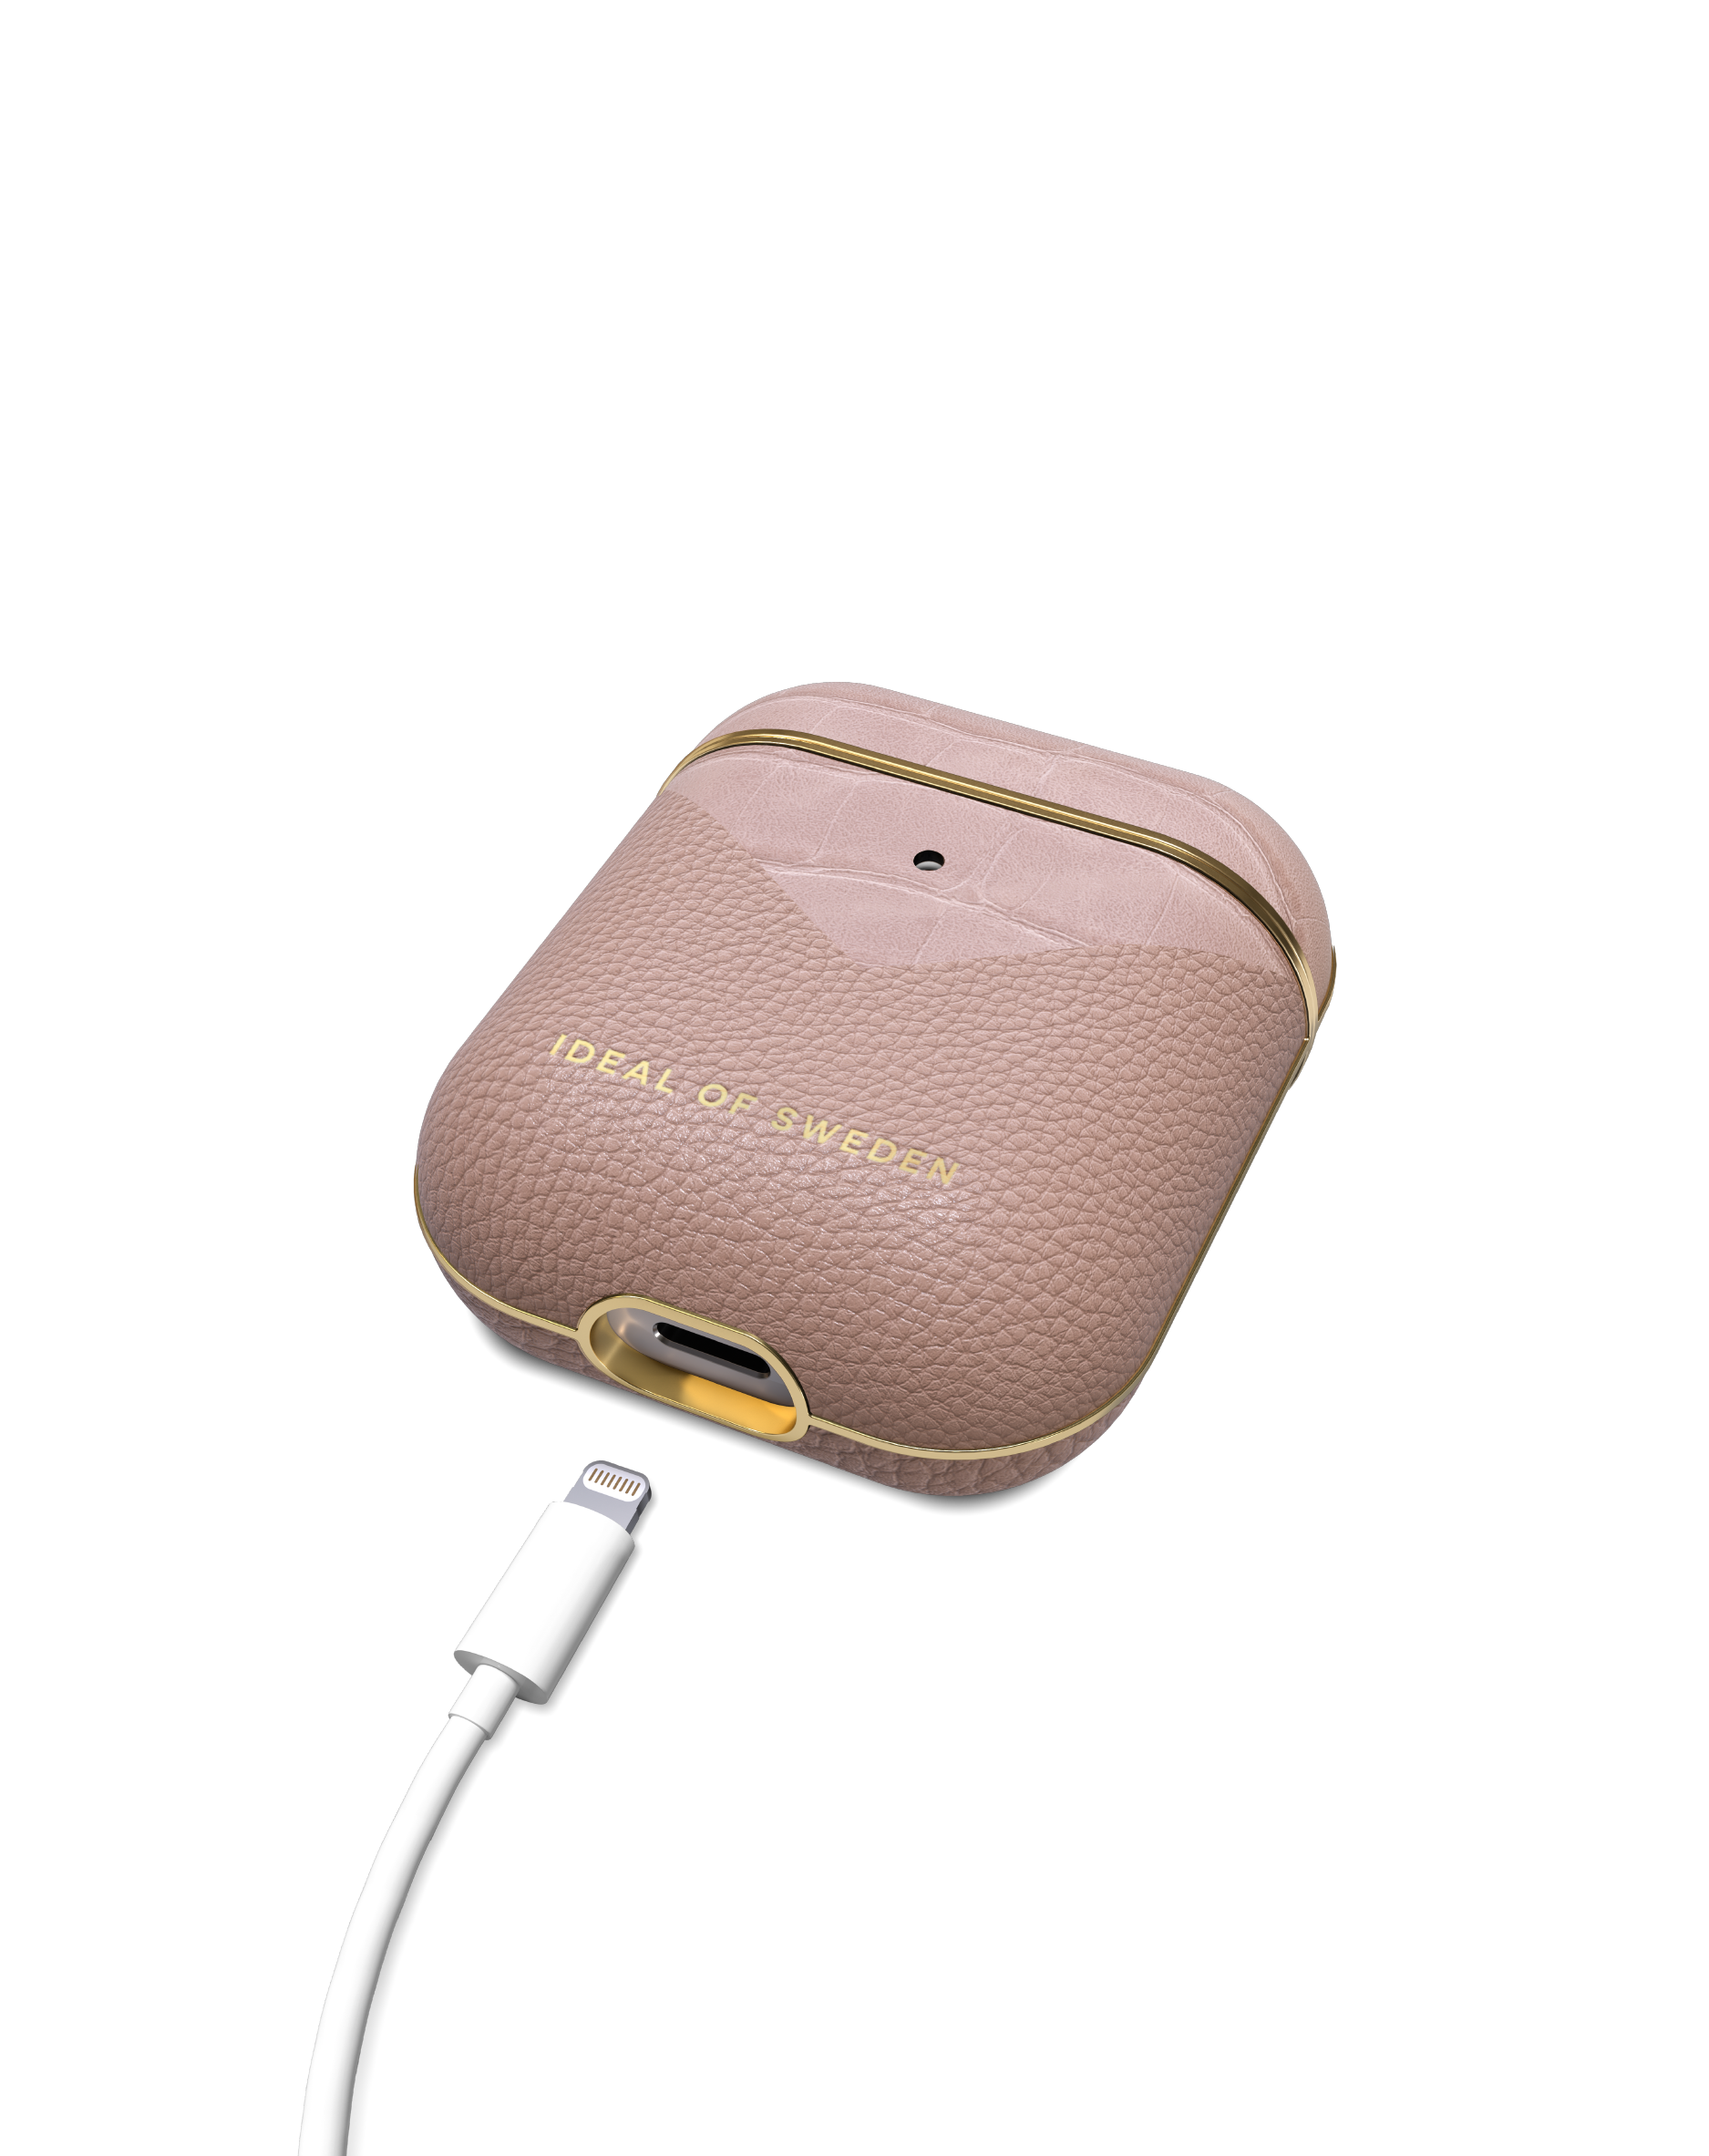 für: IDFAPC-202 Case Rose SWEDEN IDEAL Apple Cover Smoke AirPod passend Croco Full OF